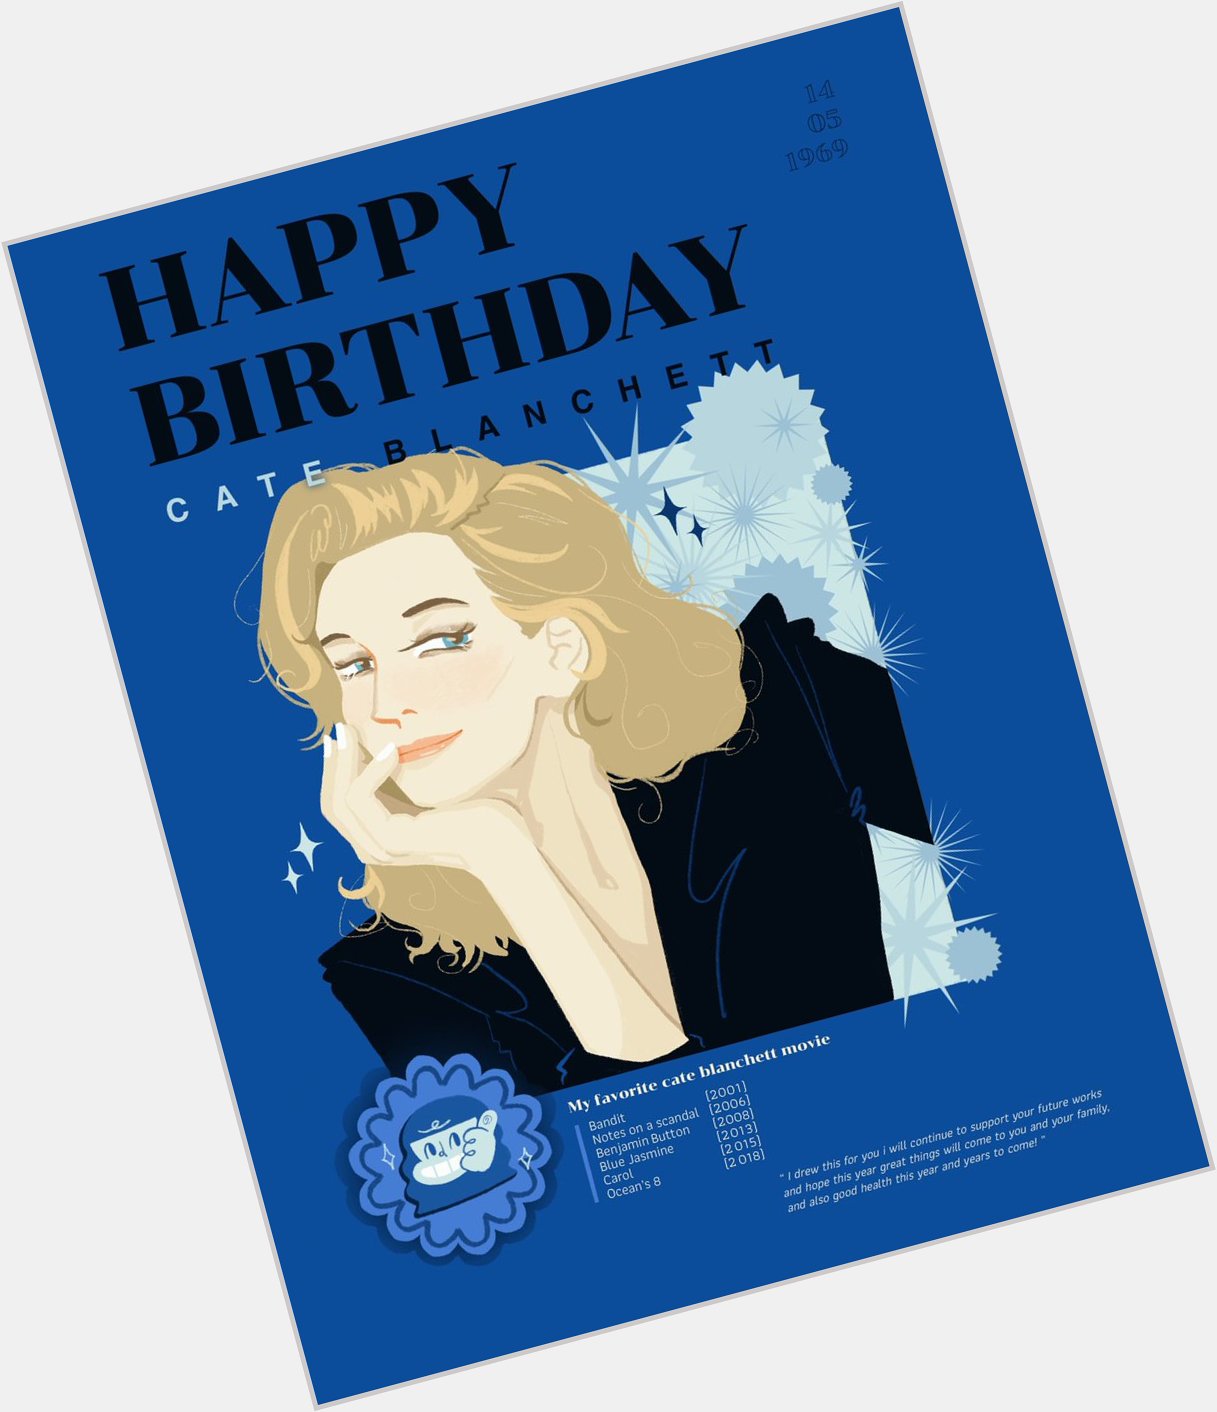 Happy birthday Cate Blanchett    